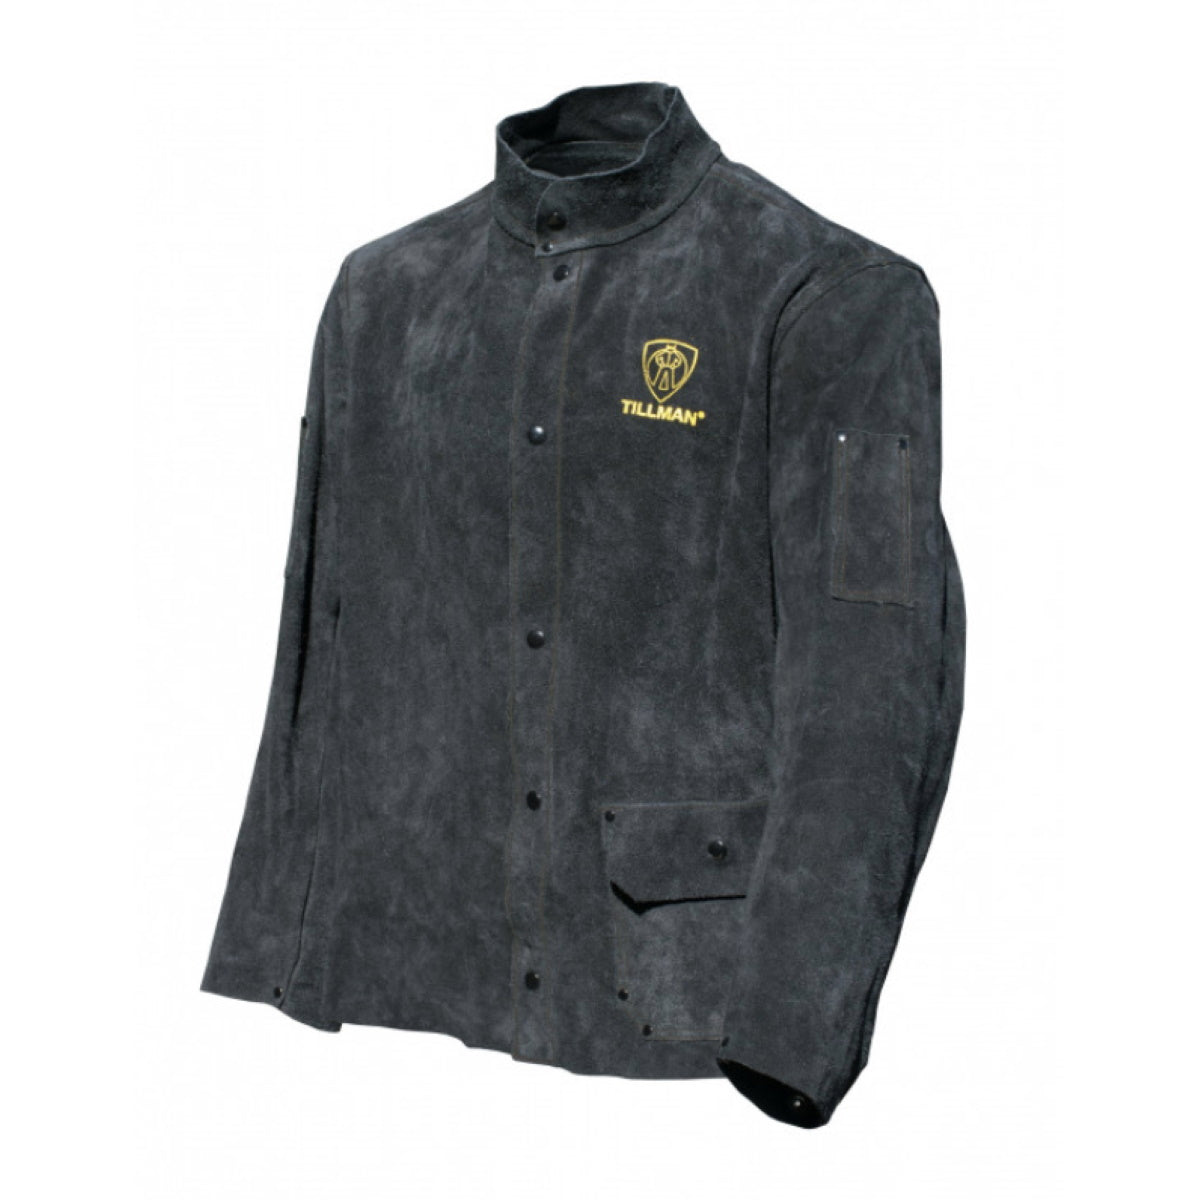 Tillman 3281 Premium Black Cowhide Leather Welding Jacket (3281)